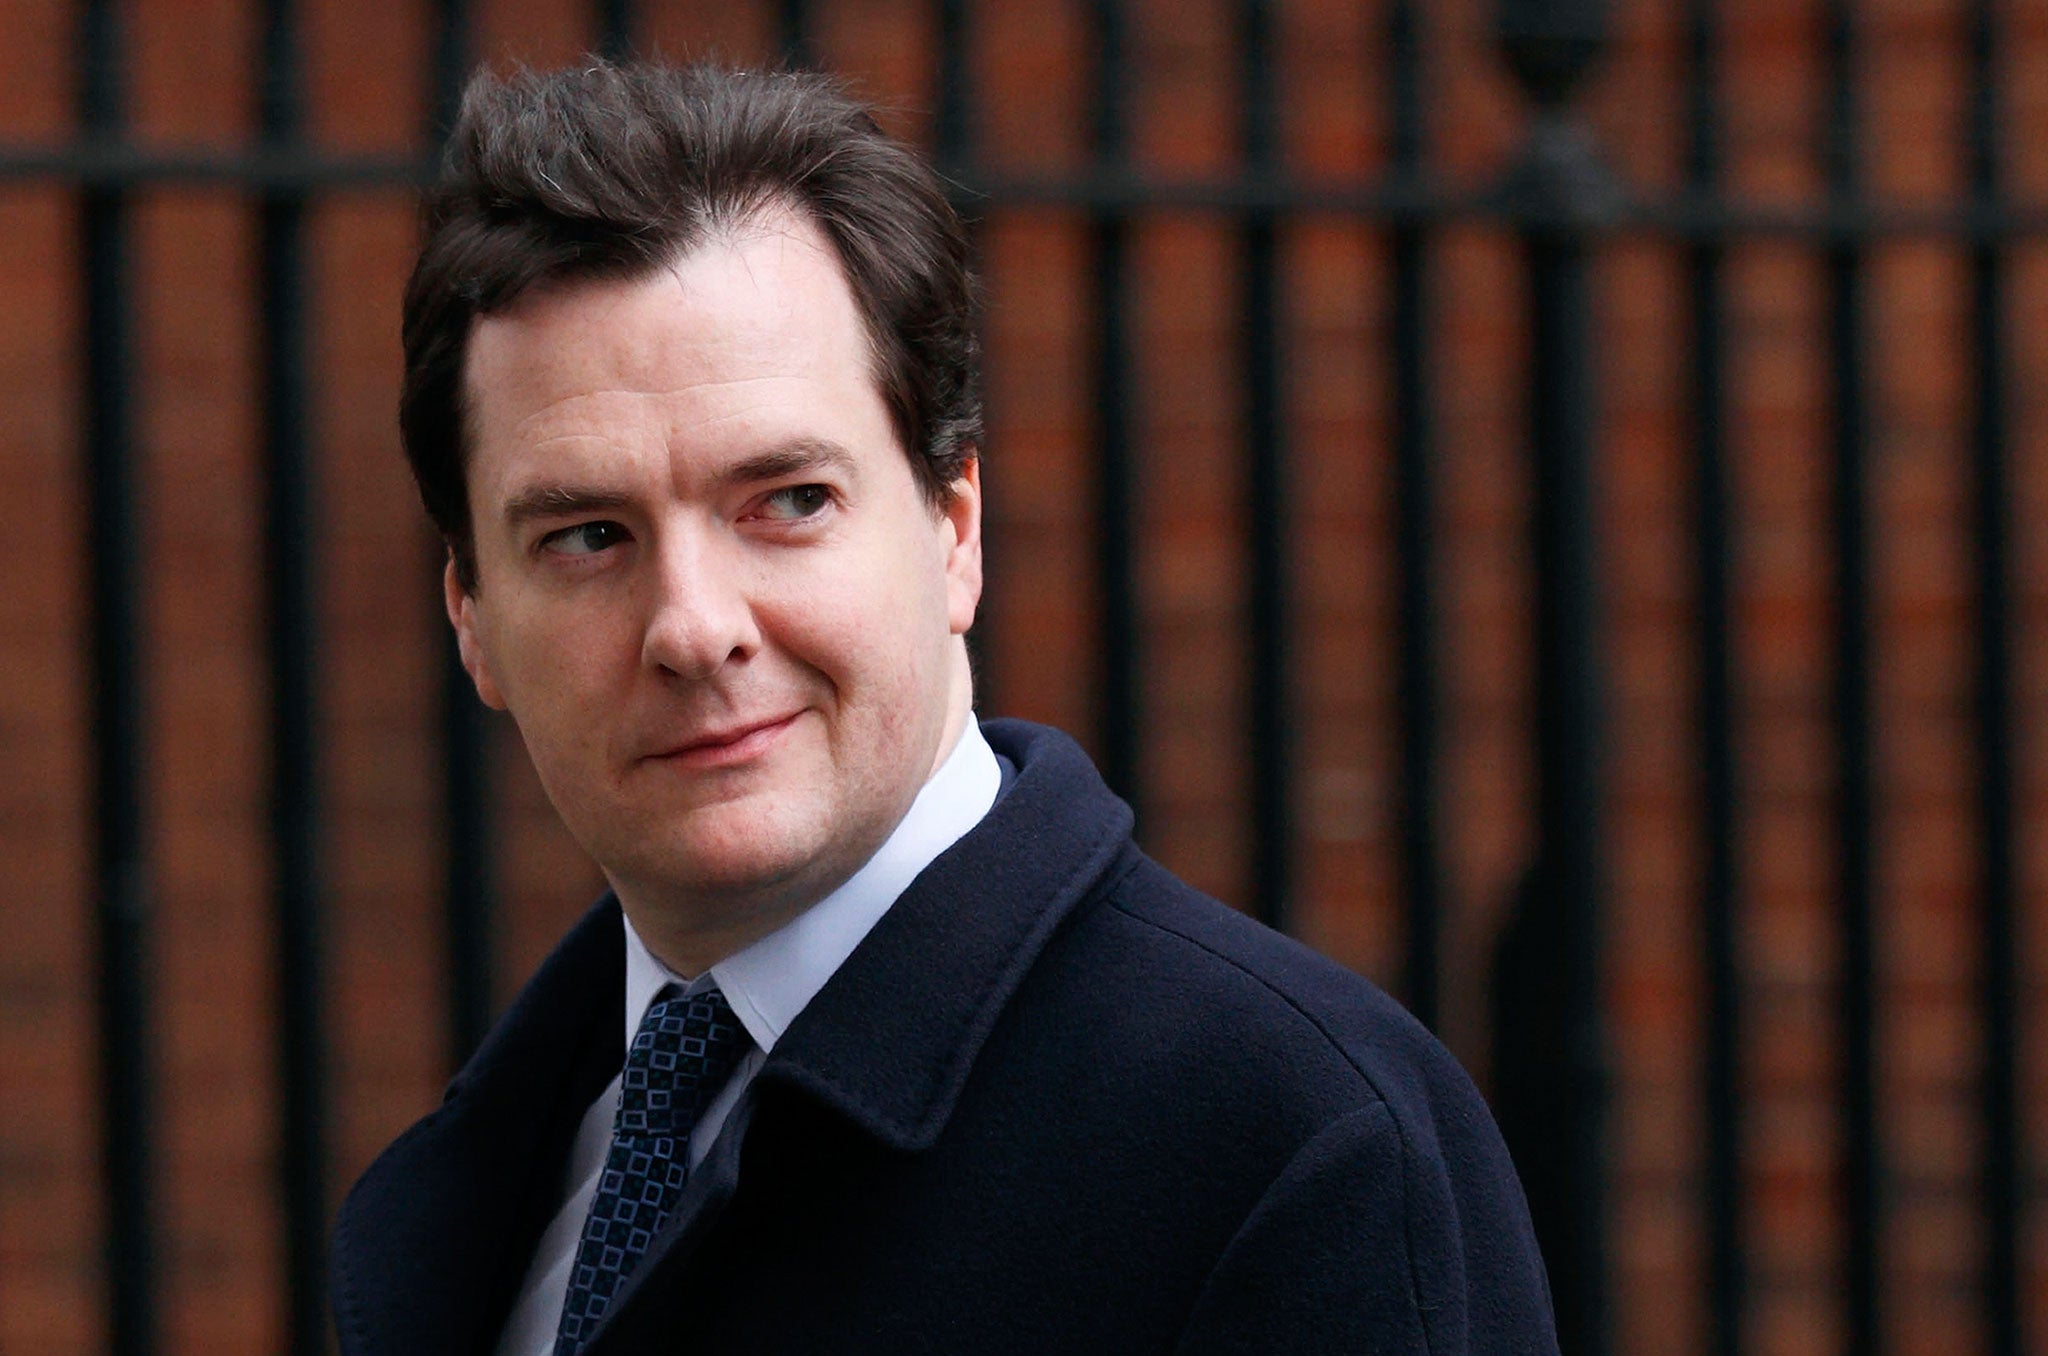 British Finance Minister George Osborne leaves 11 Downing Street in London, on February 14, 2012.